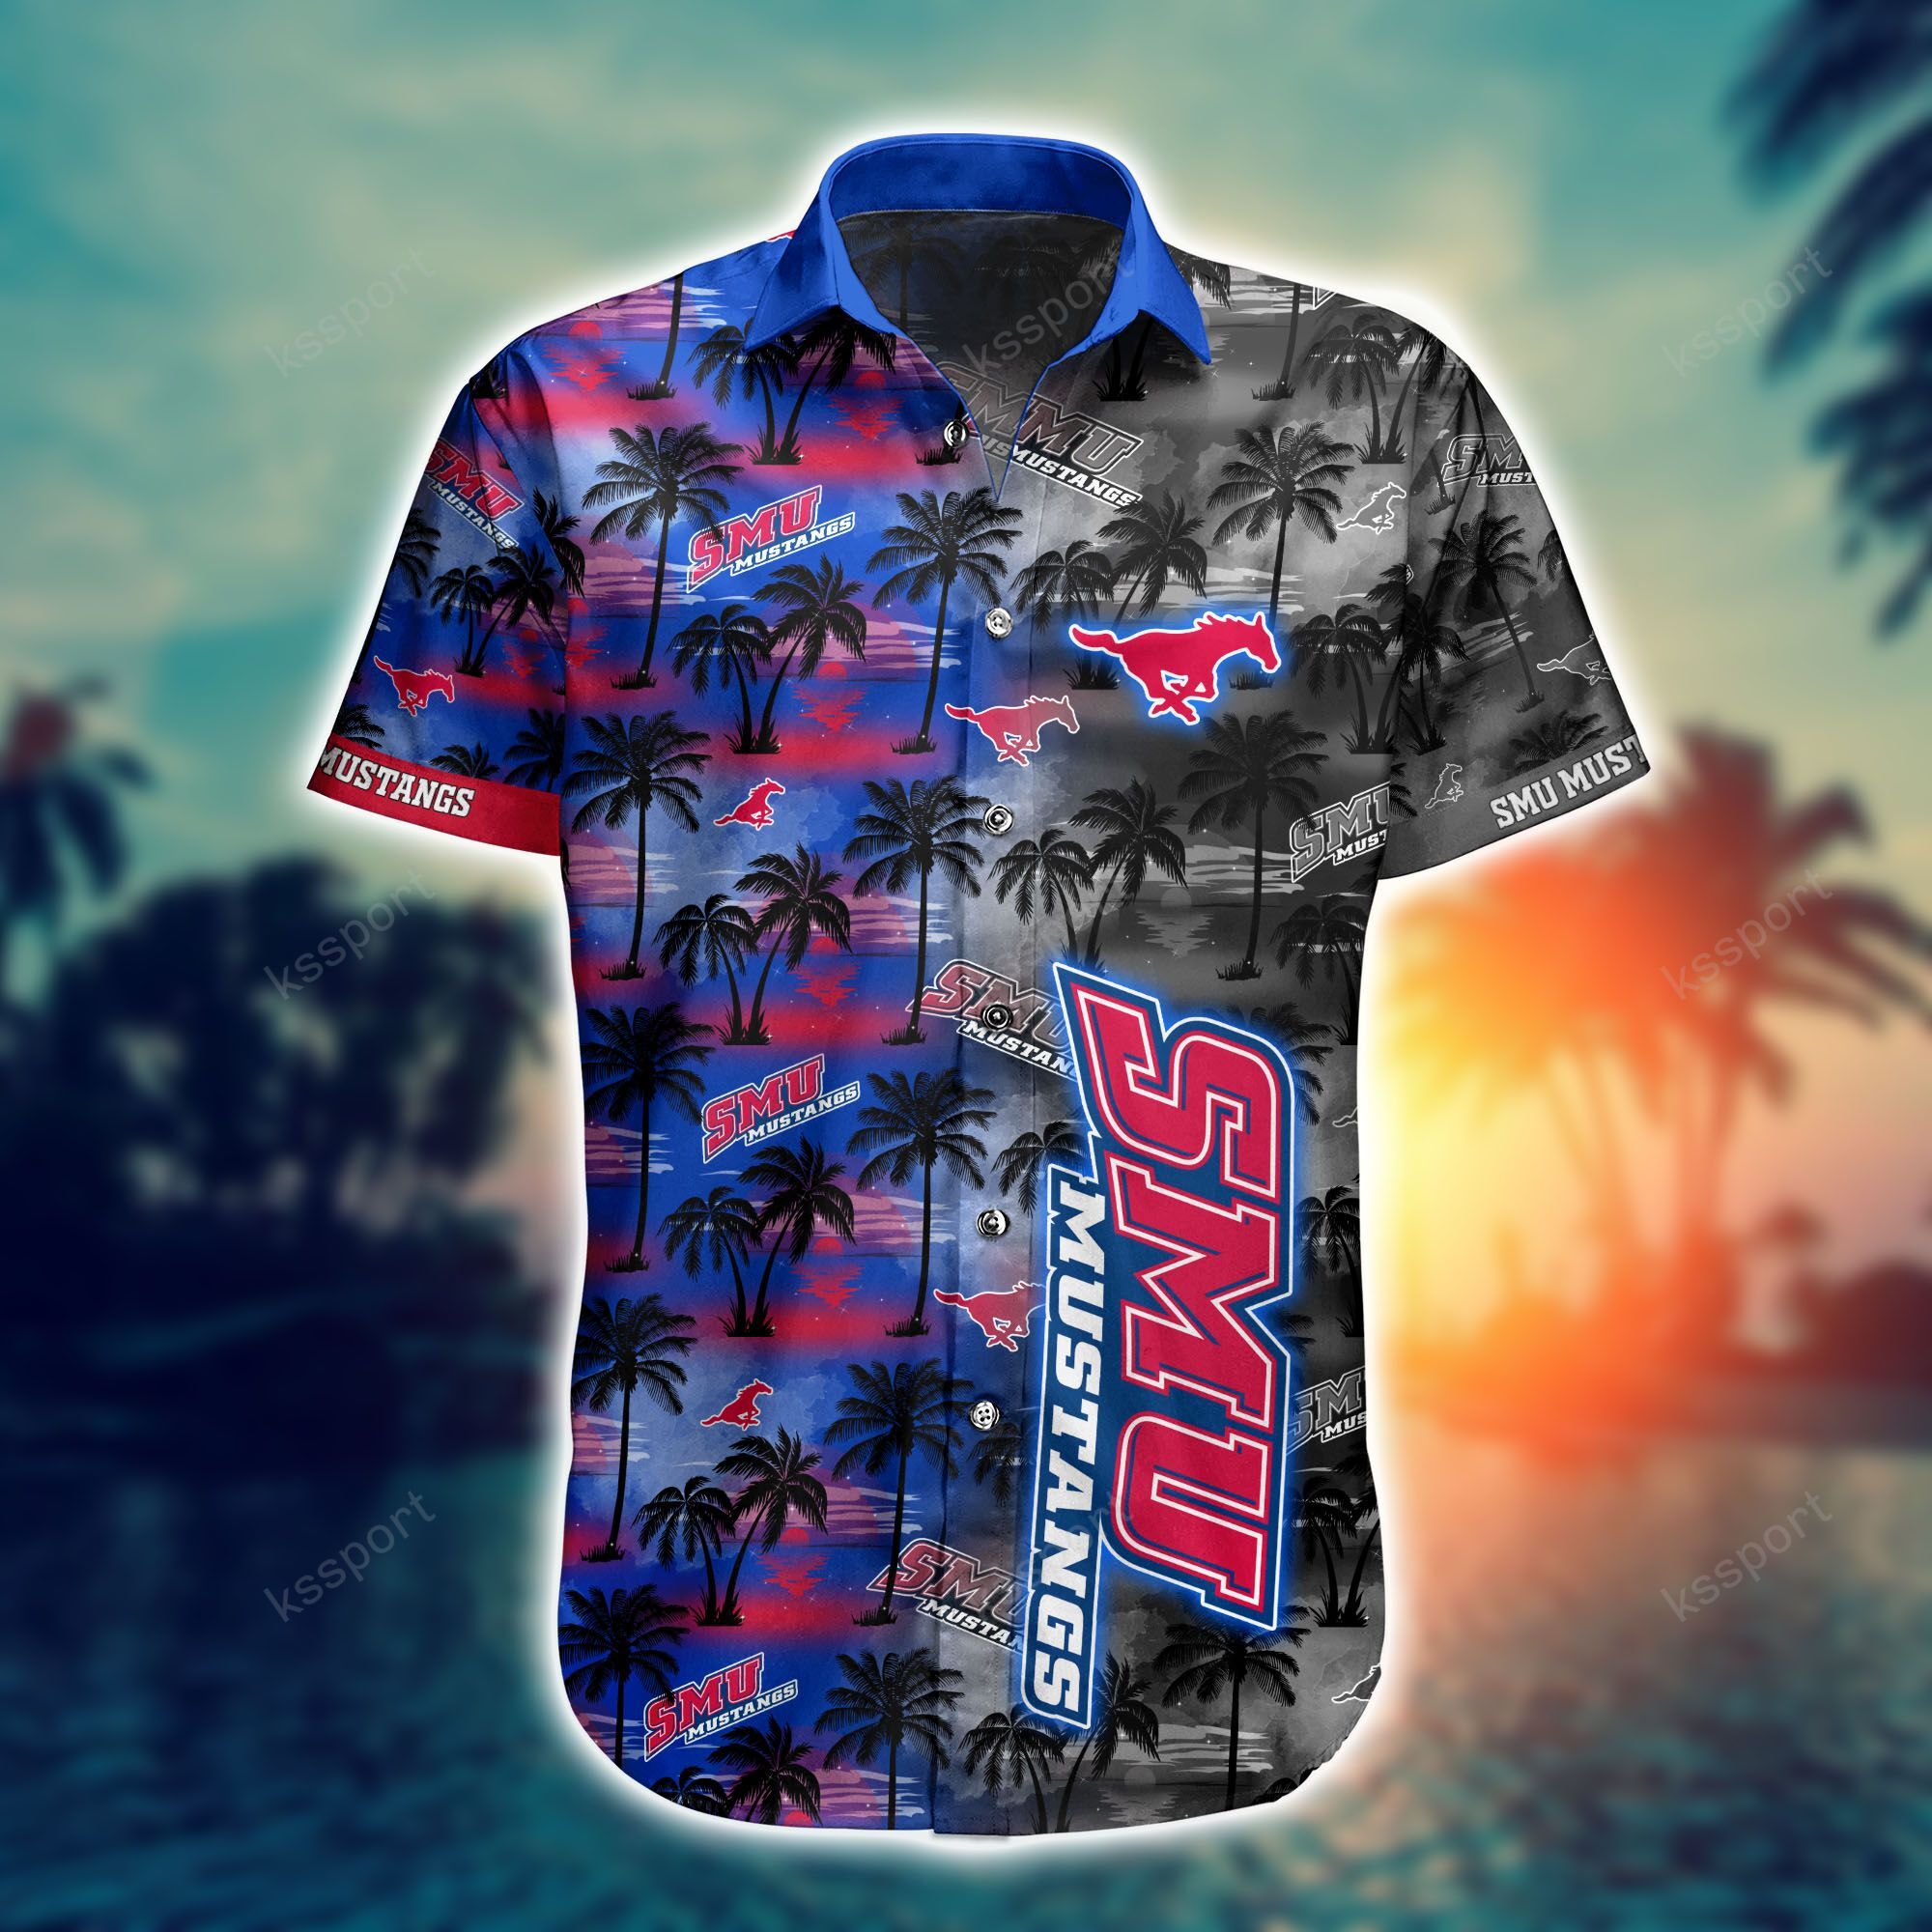 Hawaiian shirt and shorts is a great way to look stylish at a beach party 21